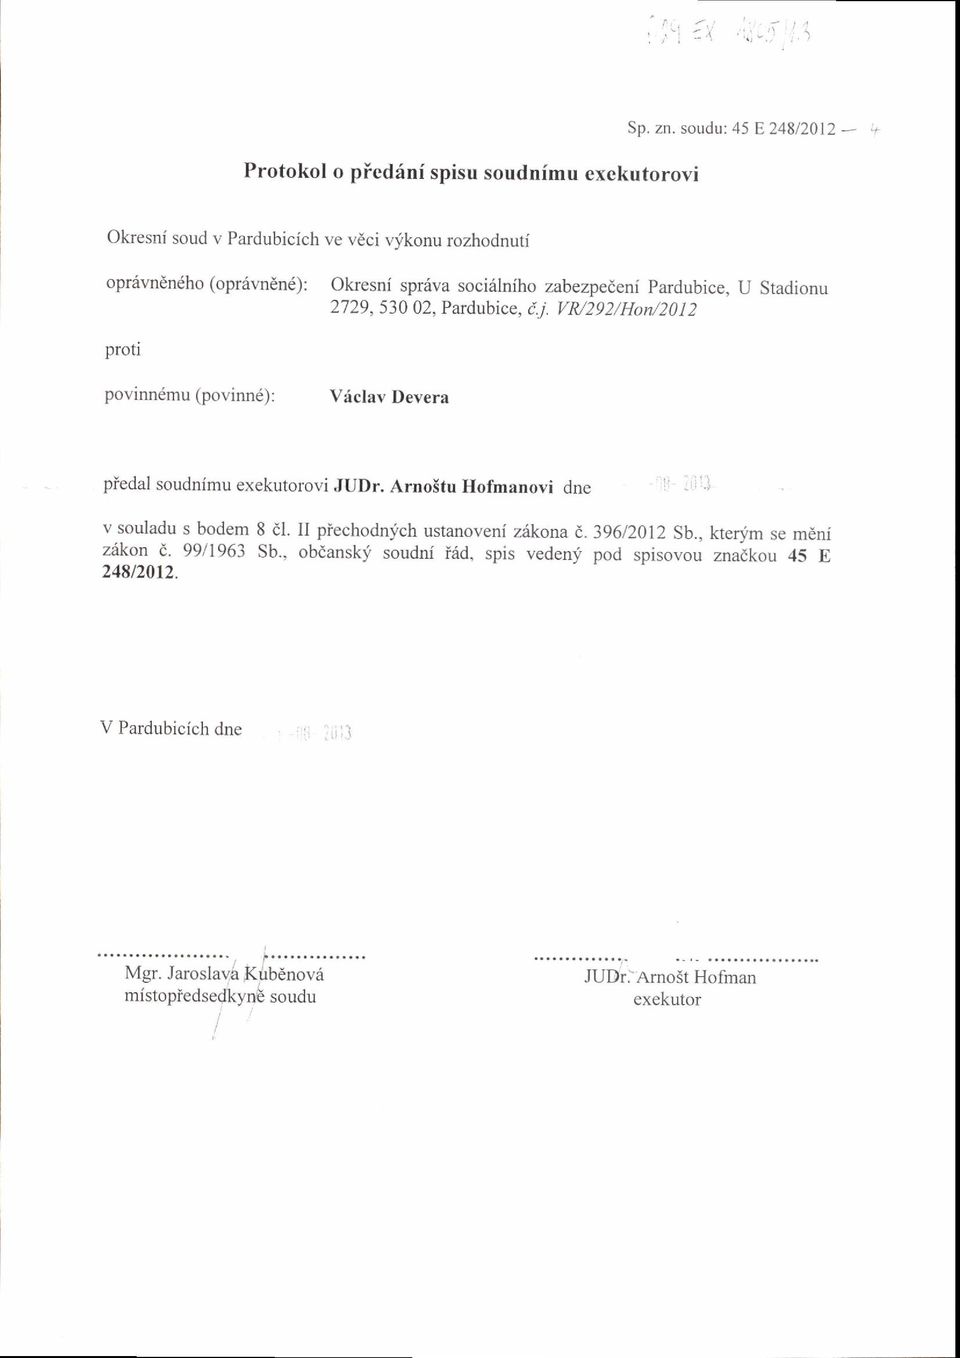 530 02, Pardubice, i.i. VM292/Hon/2012 povinn6mu (povinnd): Vdclav Devera piedal soudnimu ovi JUDr. Arno5tu Hofmanovi dne v souladu s bodem 8 dl.